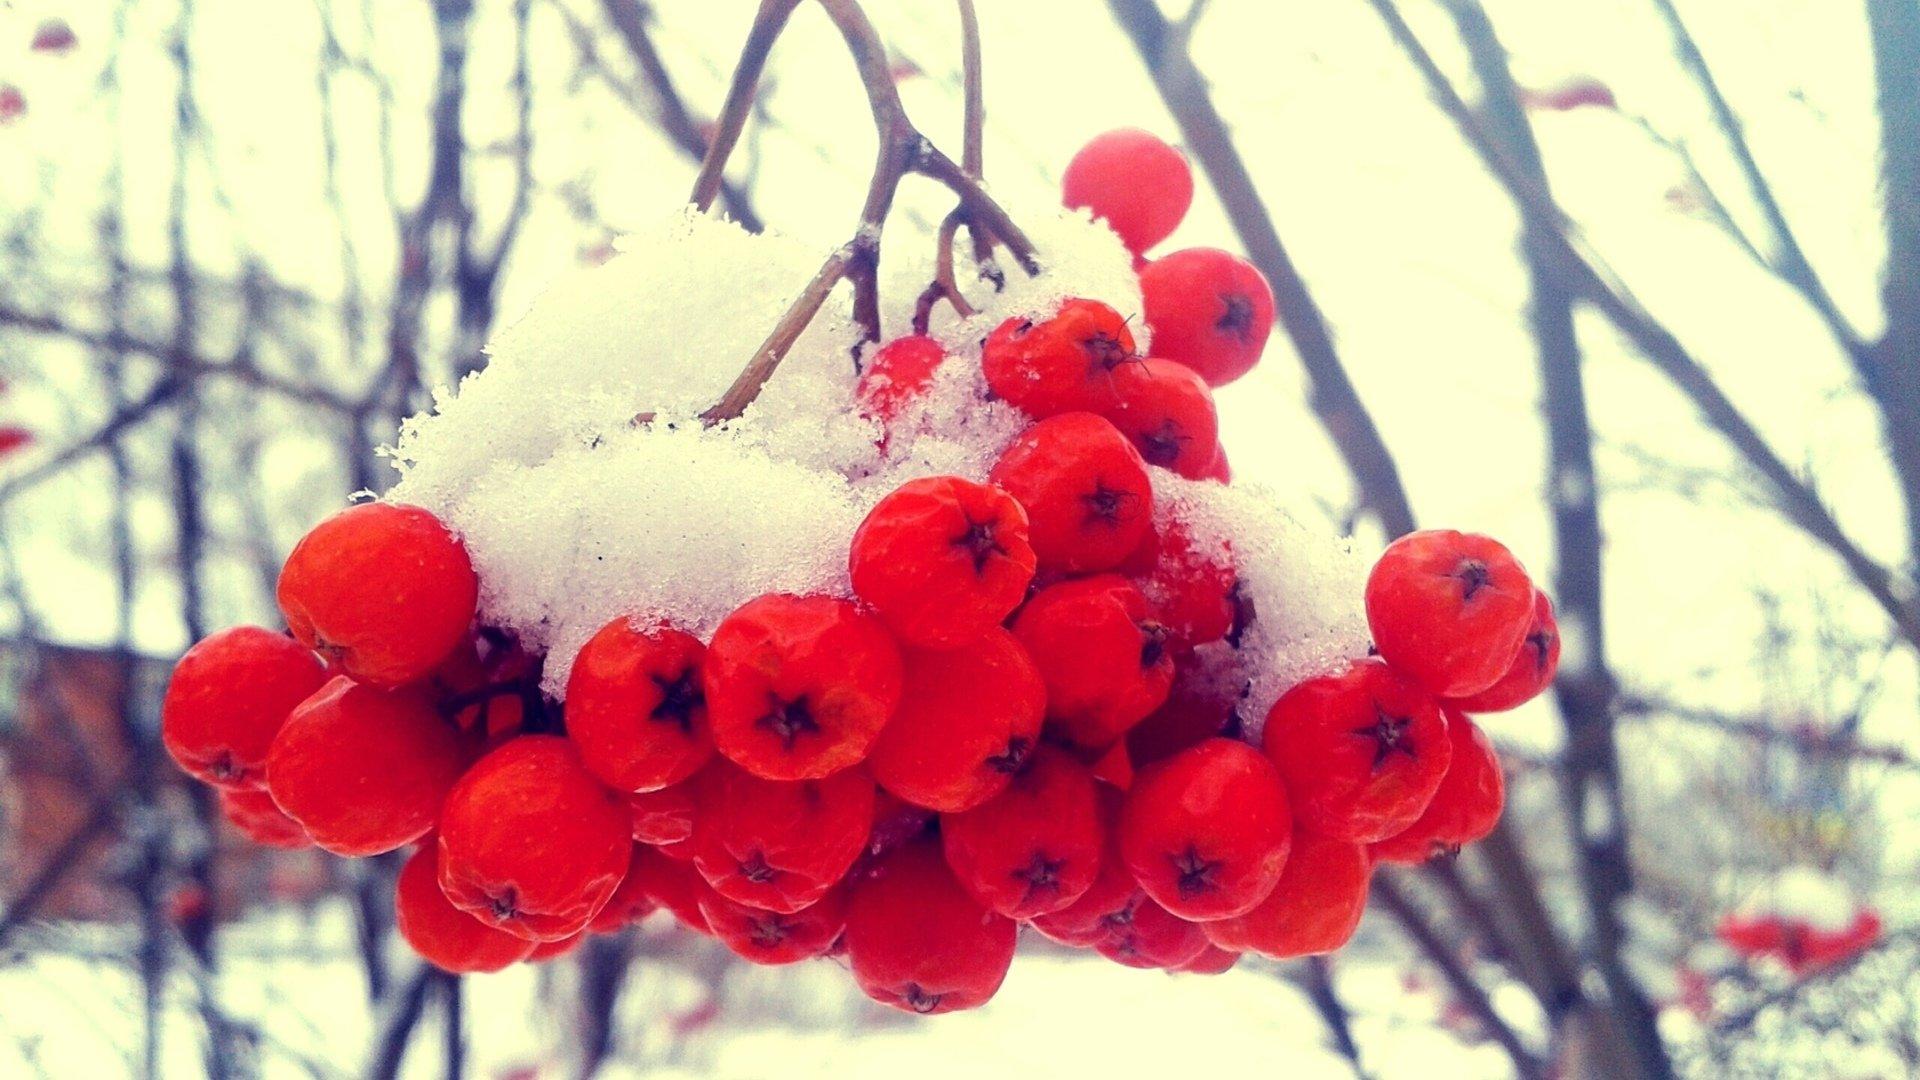 Рябина Ветки Зима - Бесплатное фото на Pixabay - Pixabay